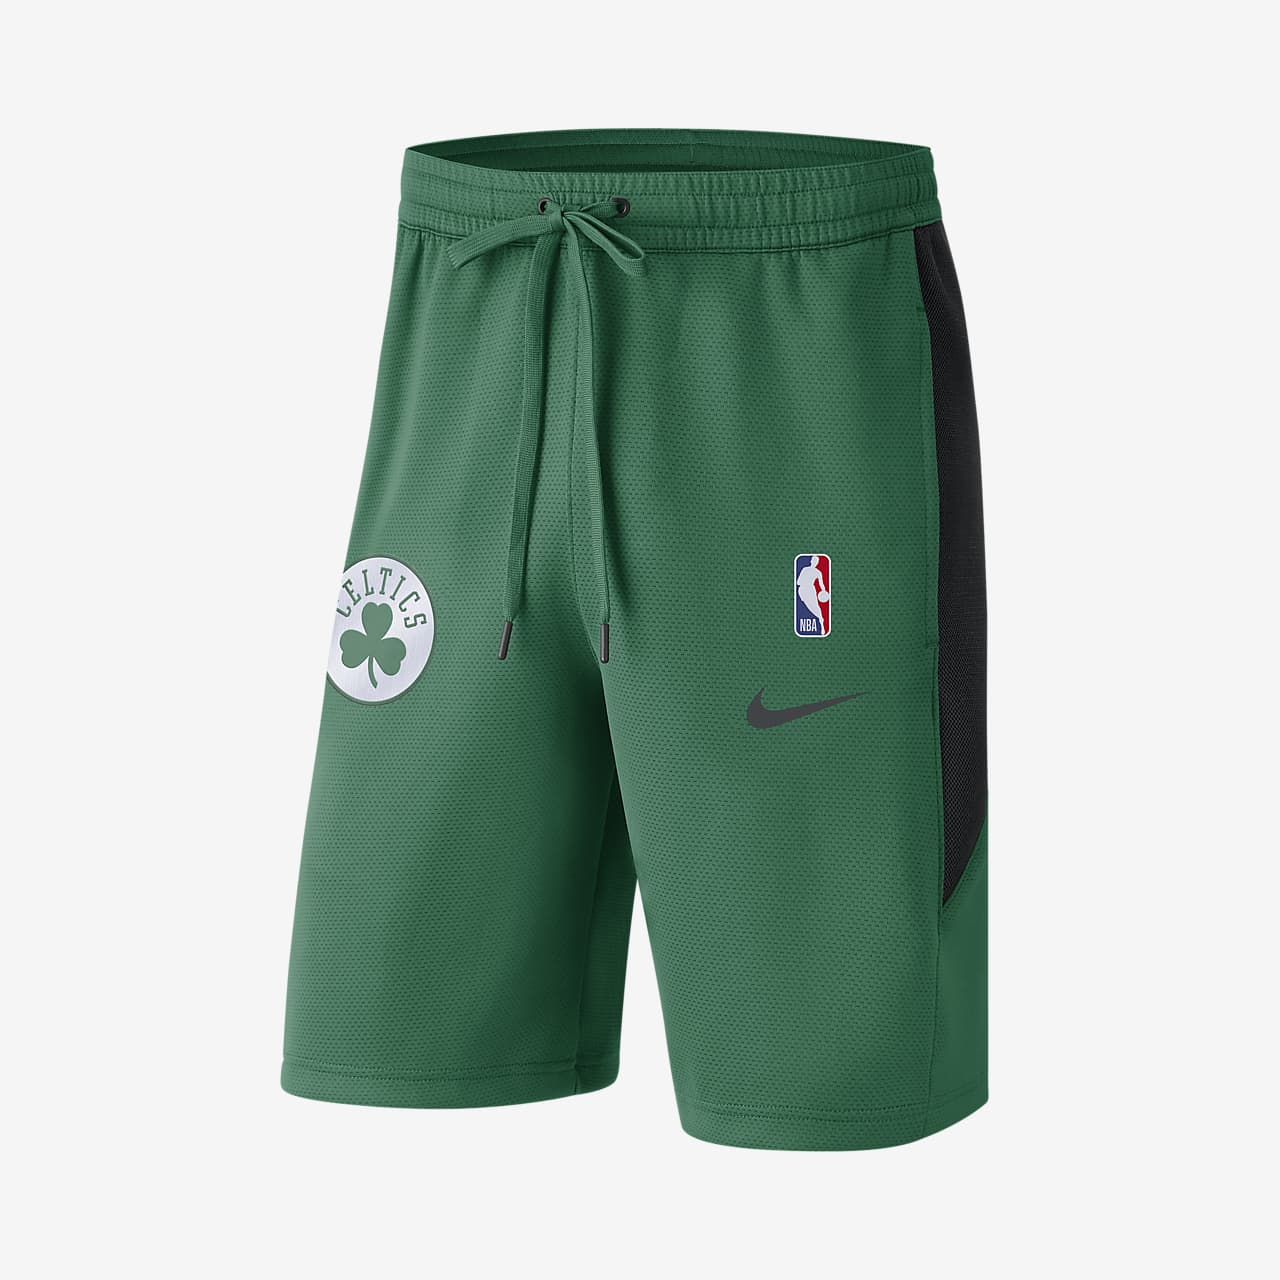 Shorts de la NBA hombre Boston Nike Nike.com